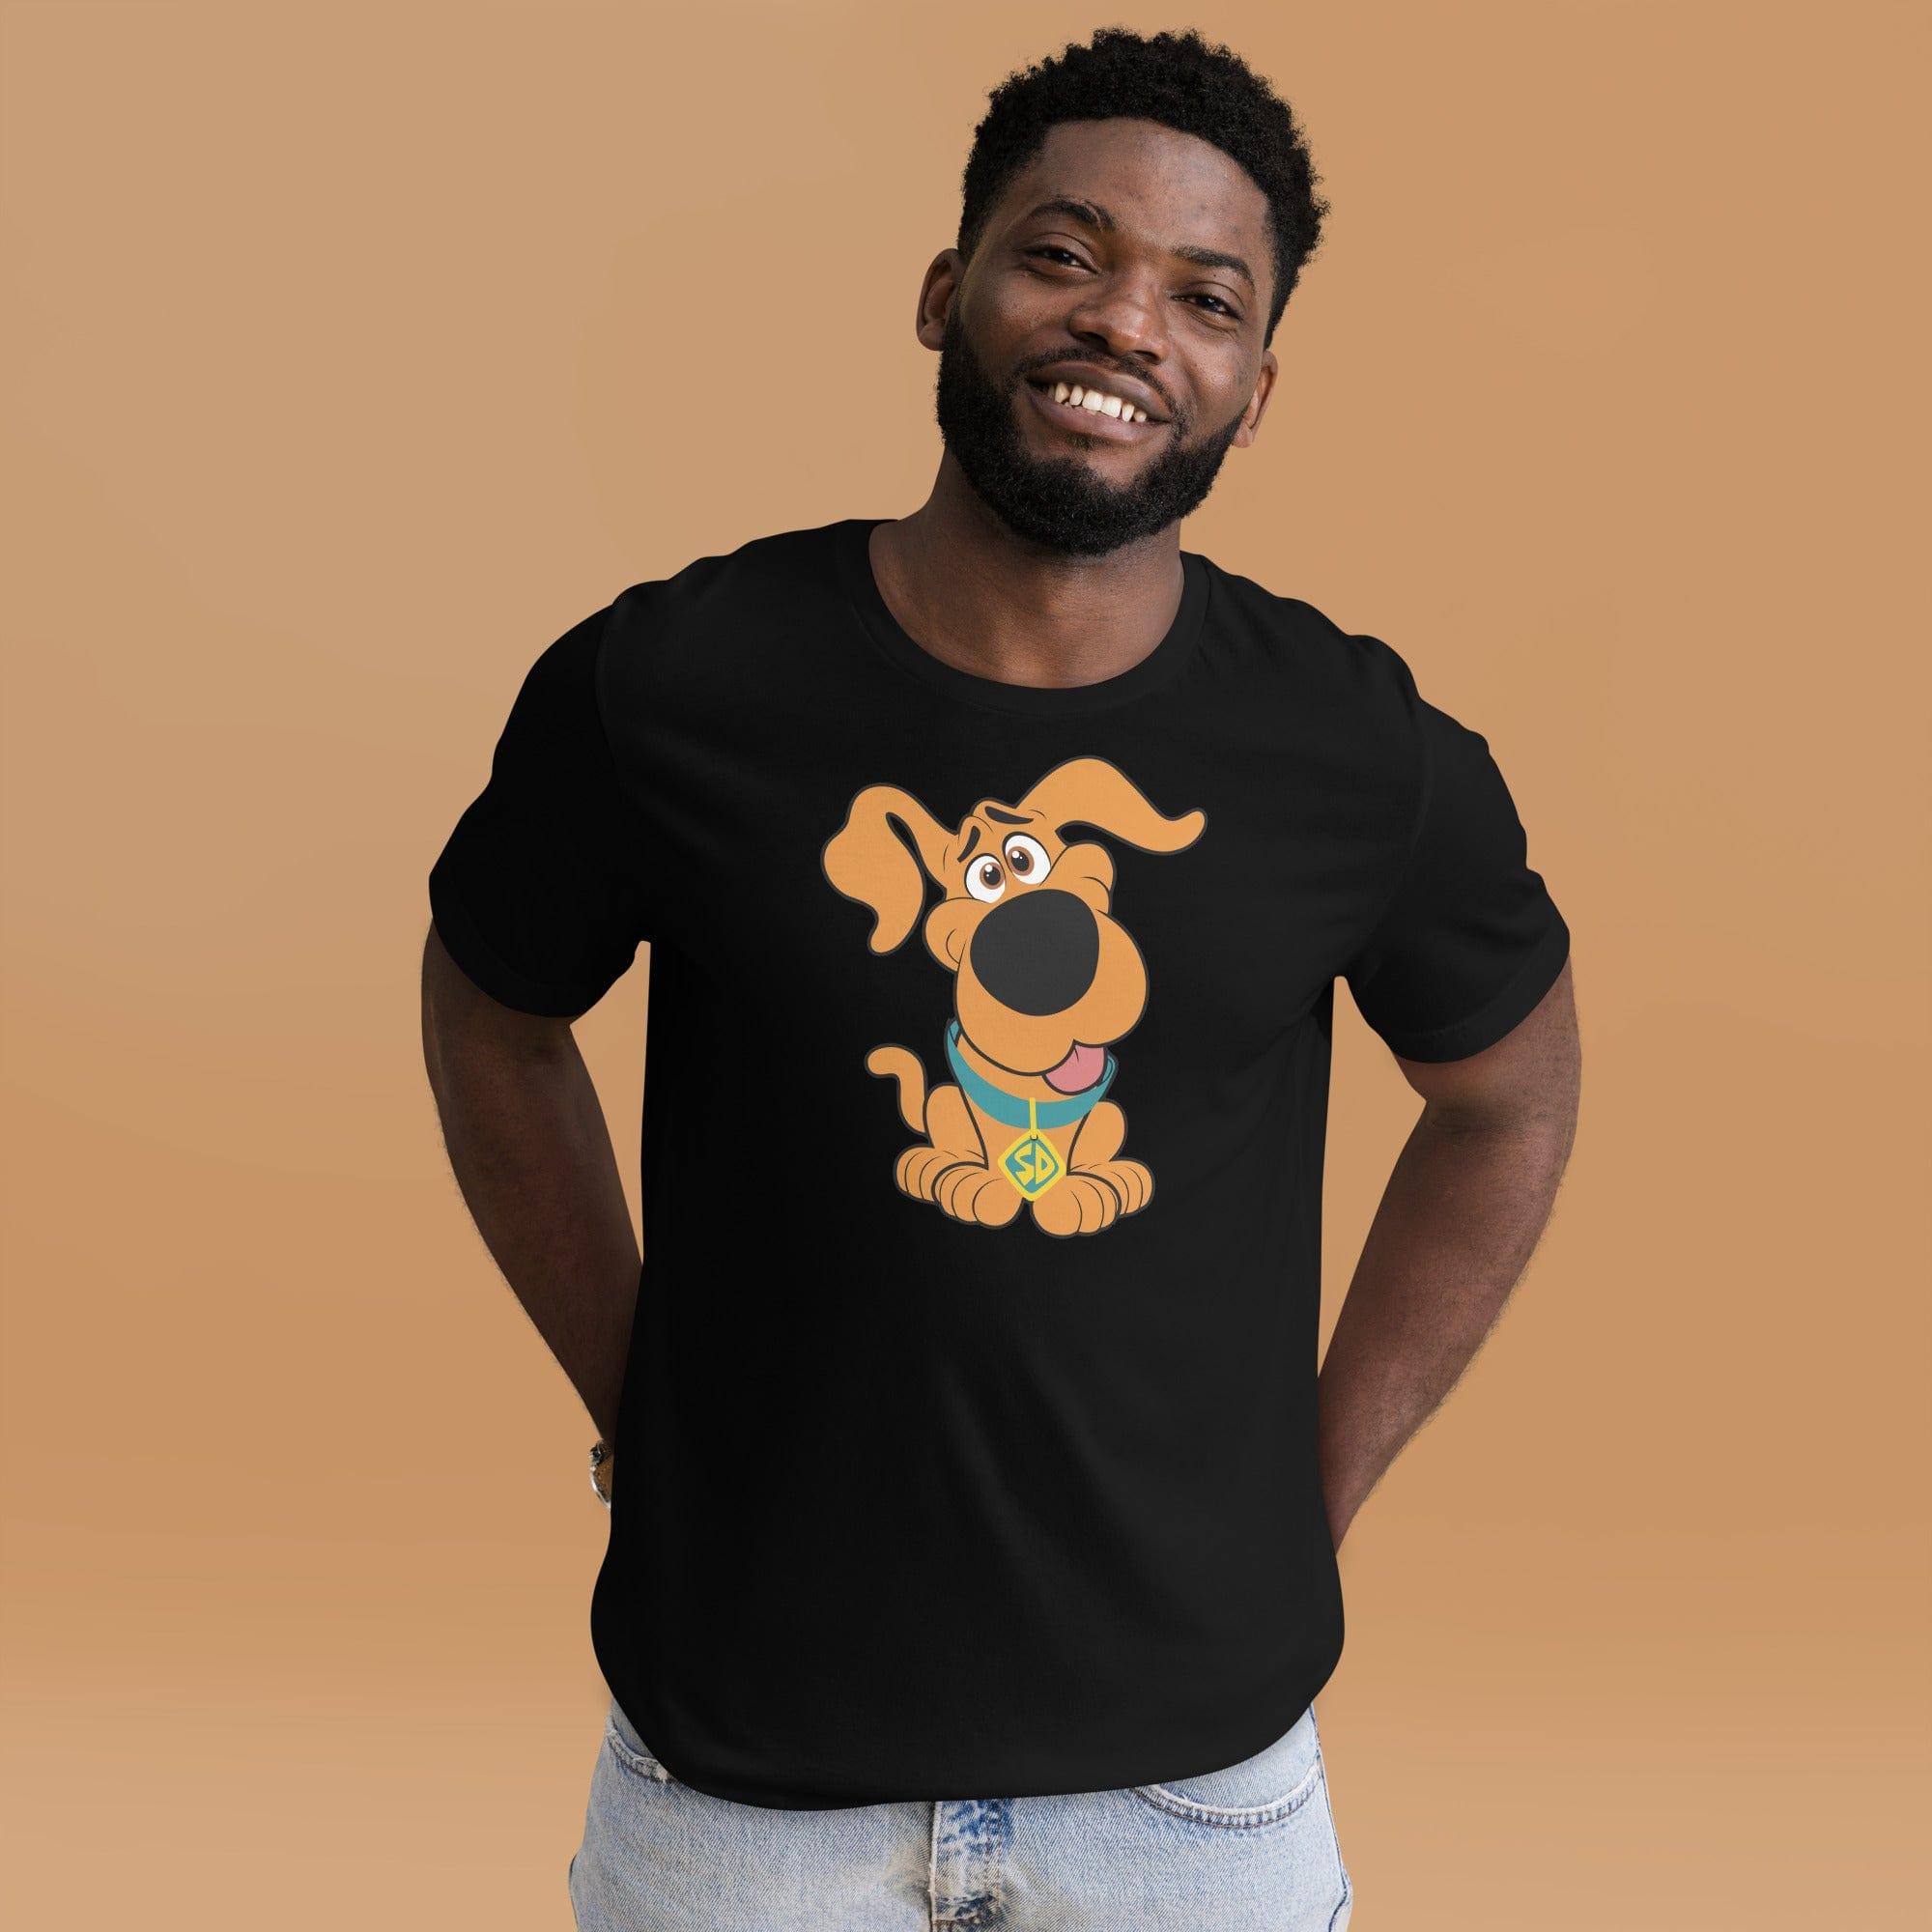 Scooby Doo T-shirt 70's Cartoon Puppy Scooby Unisex Top - TopKoalaTee